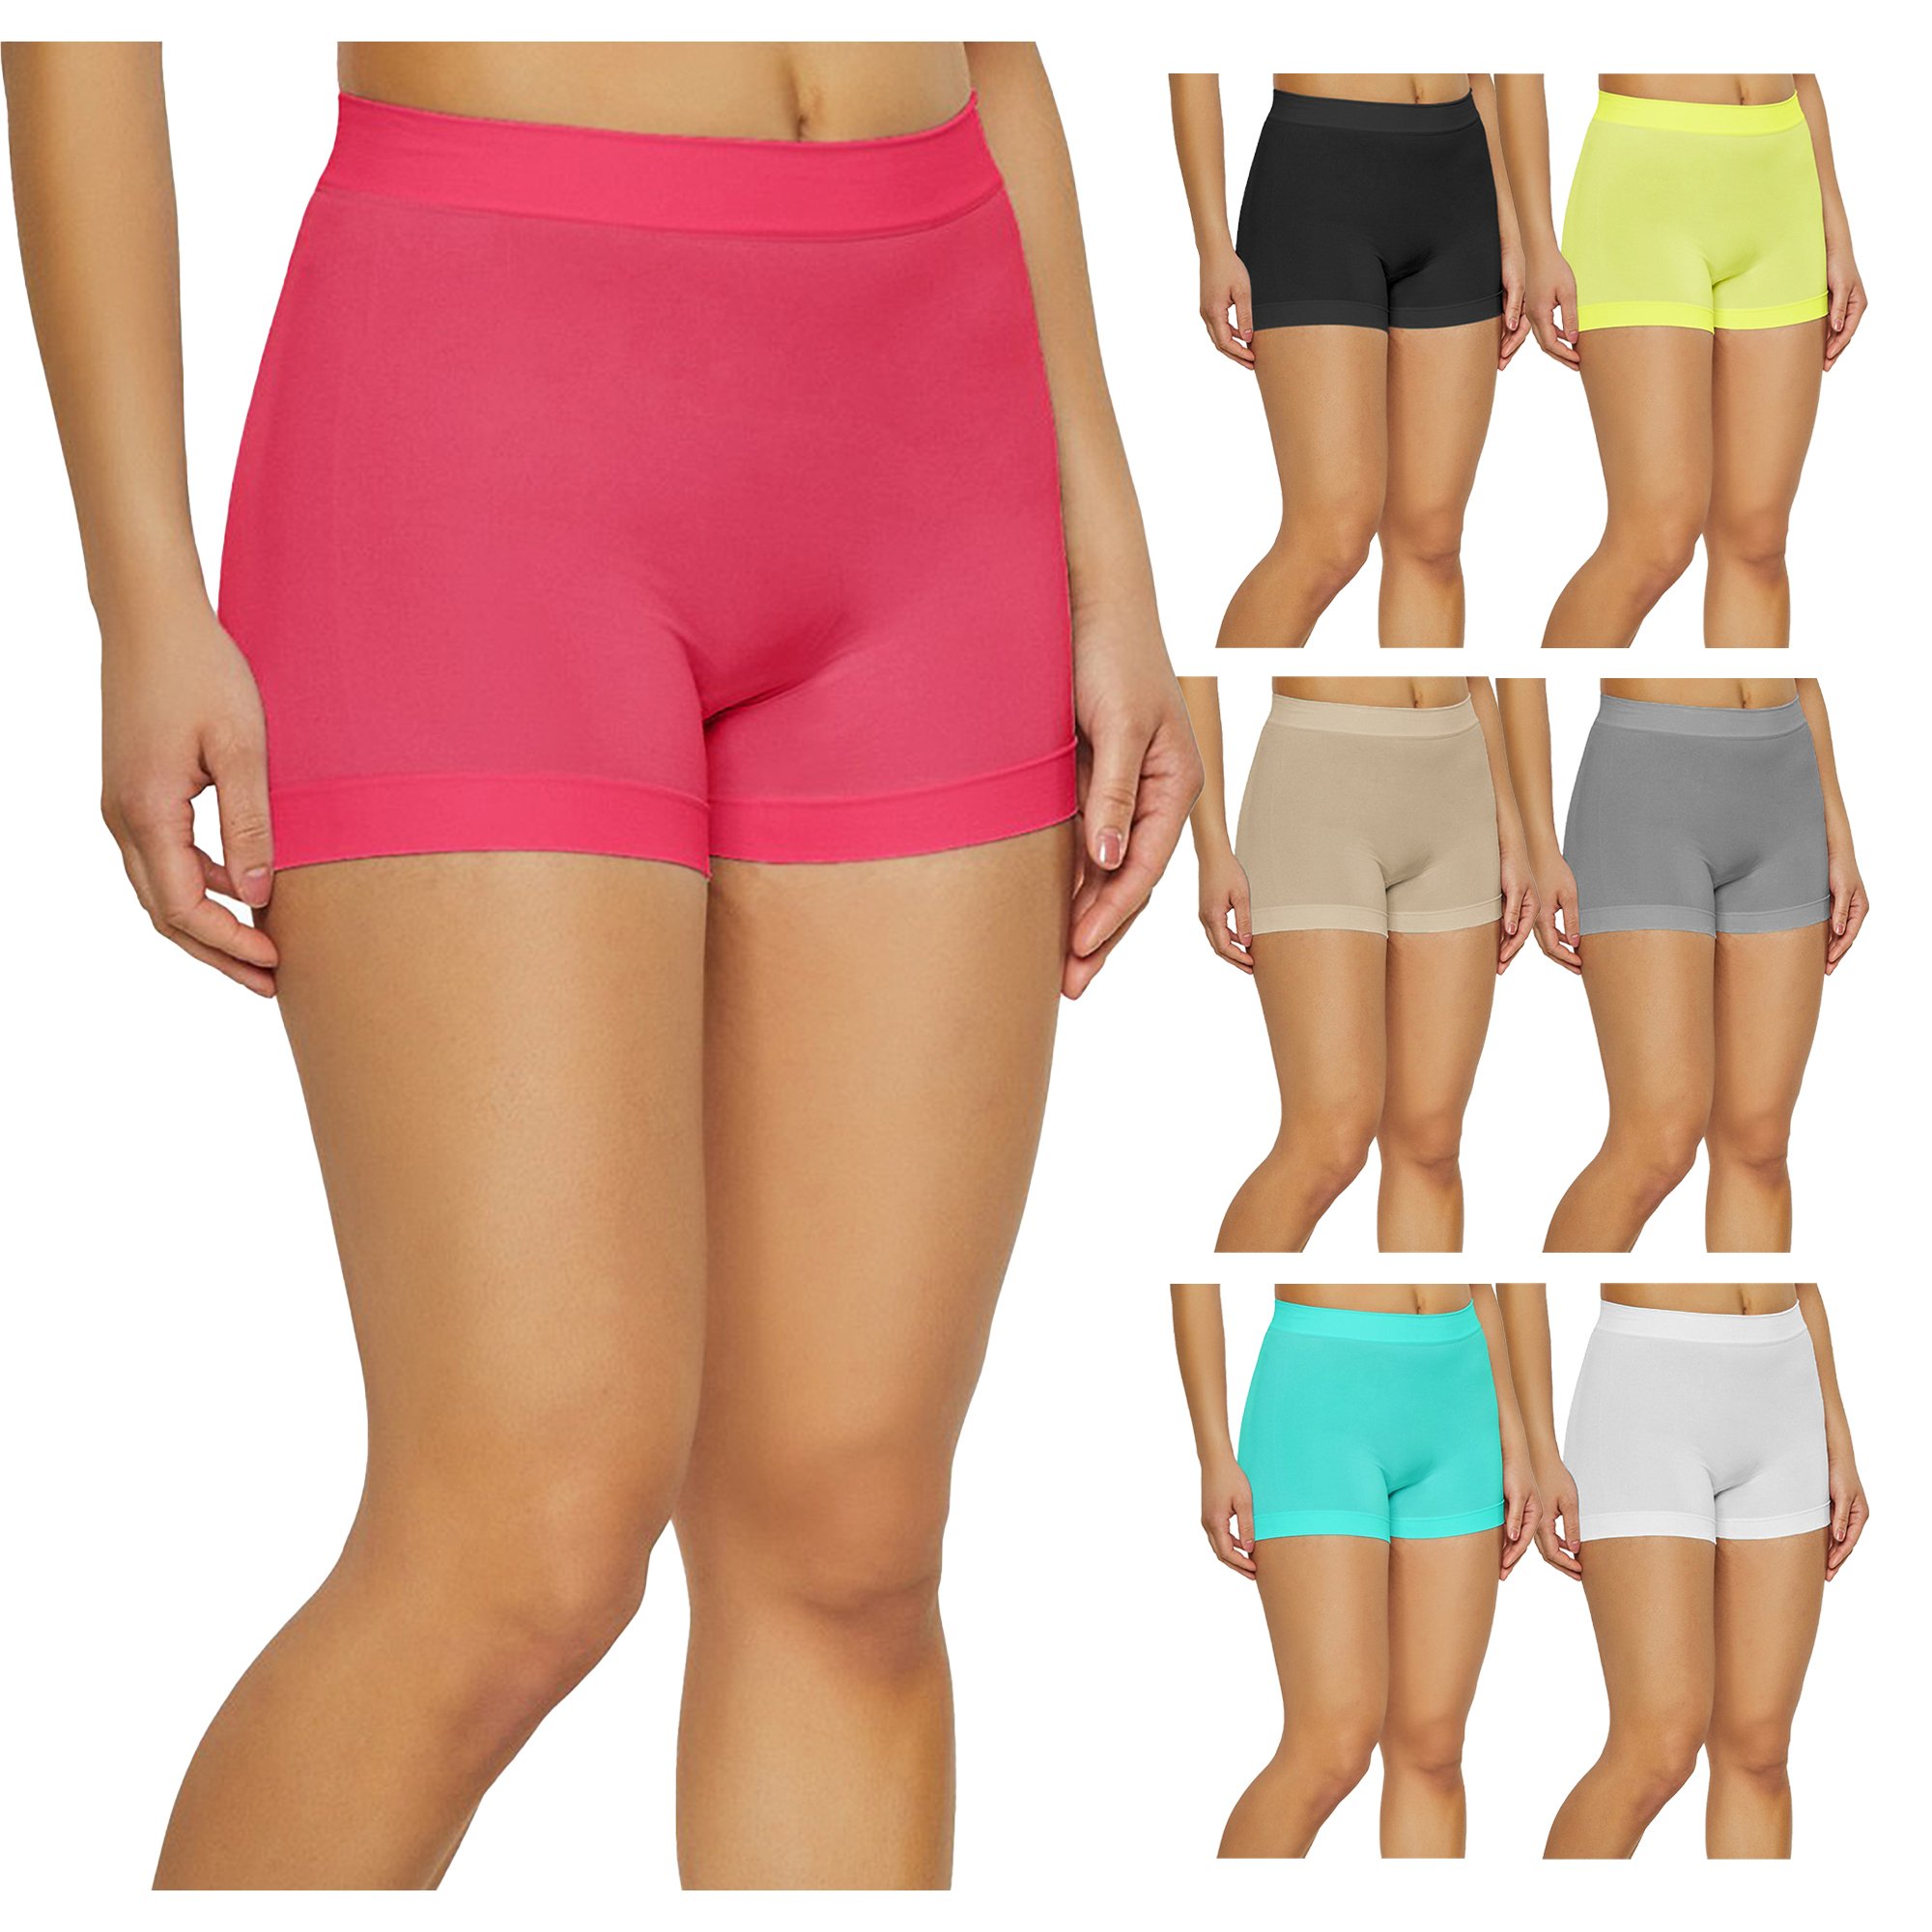 12-Pack Women's High Waisted Biker Bottom Shorts For Yoga Gym Running Ladies Pants - BLACK, M